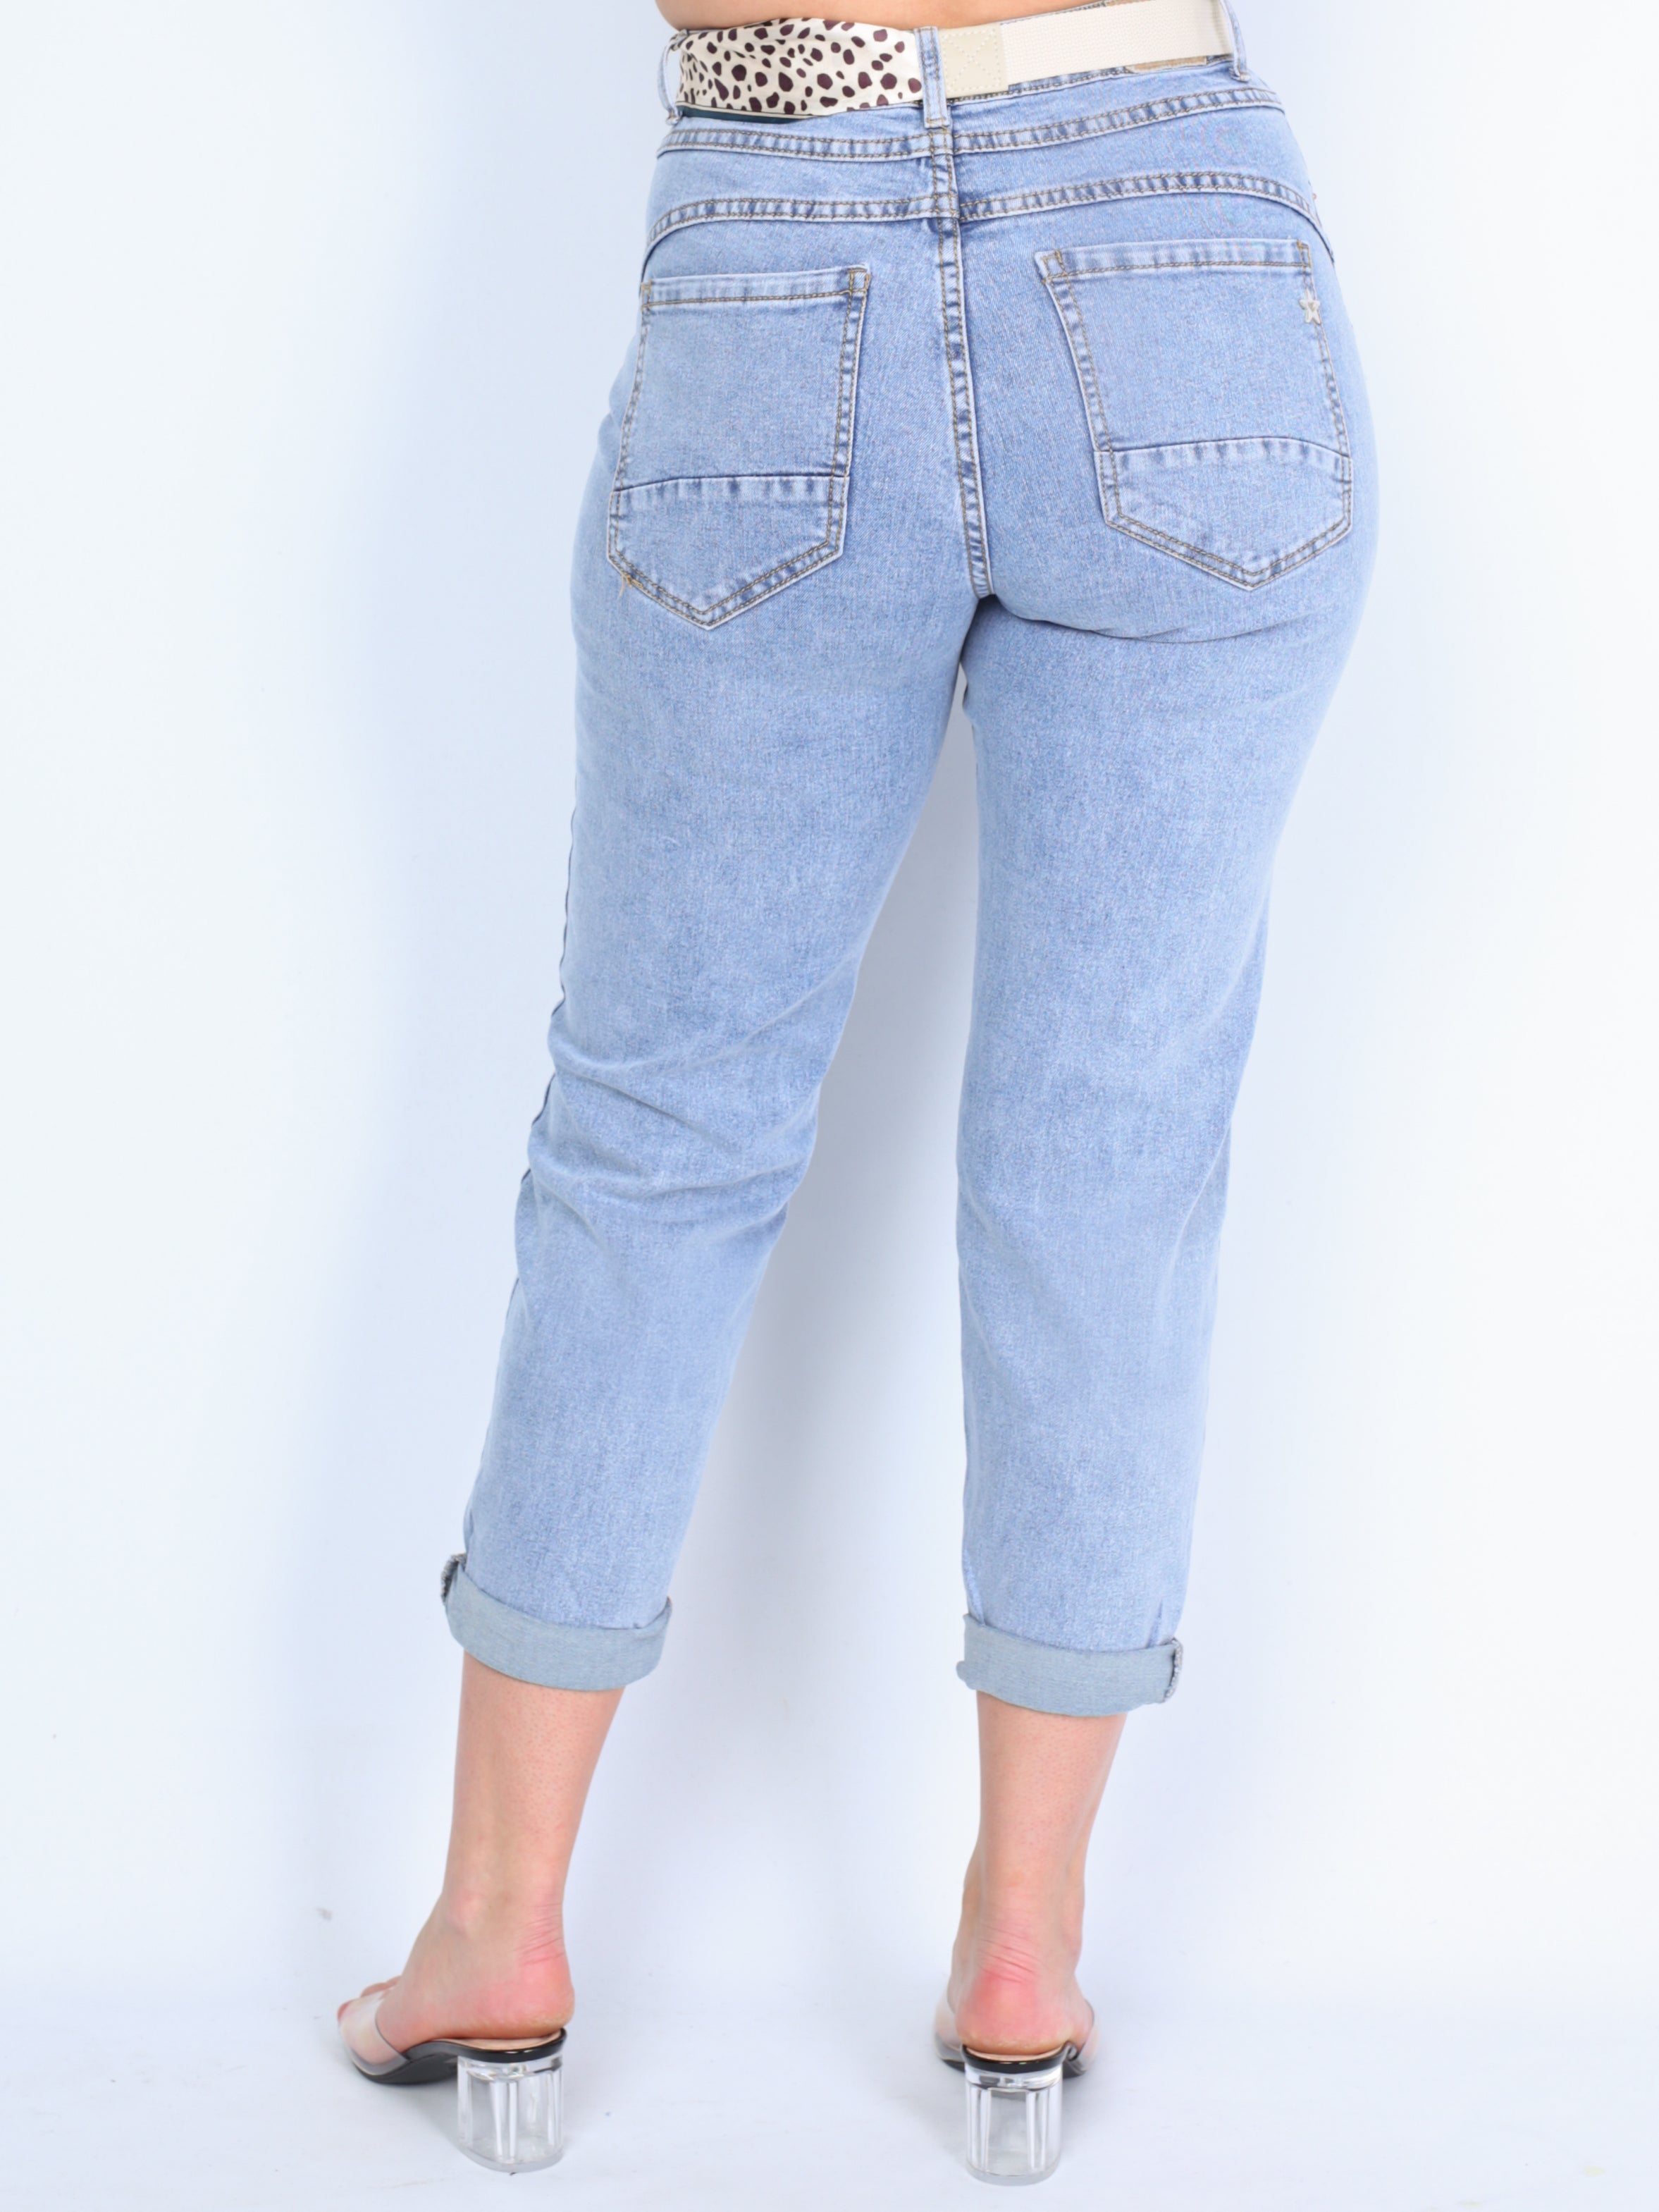 Karostar jeans m. bælte dyreprint